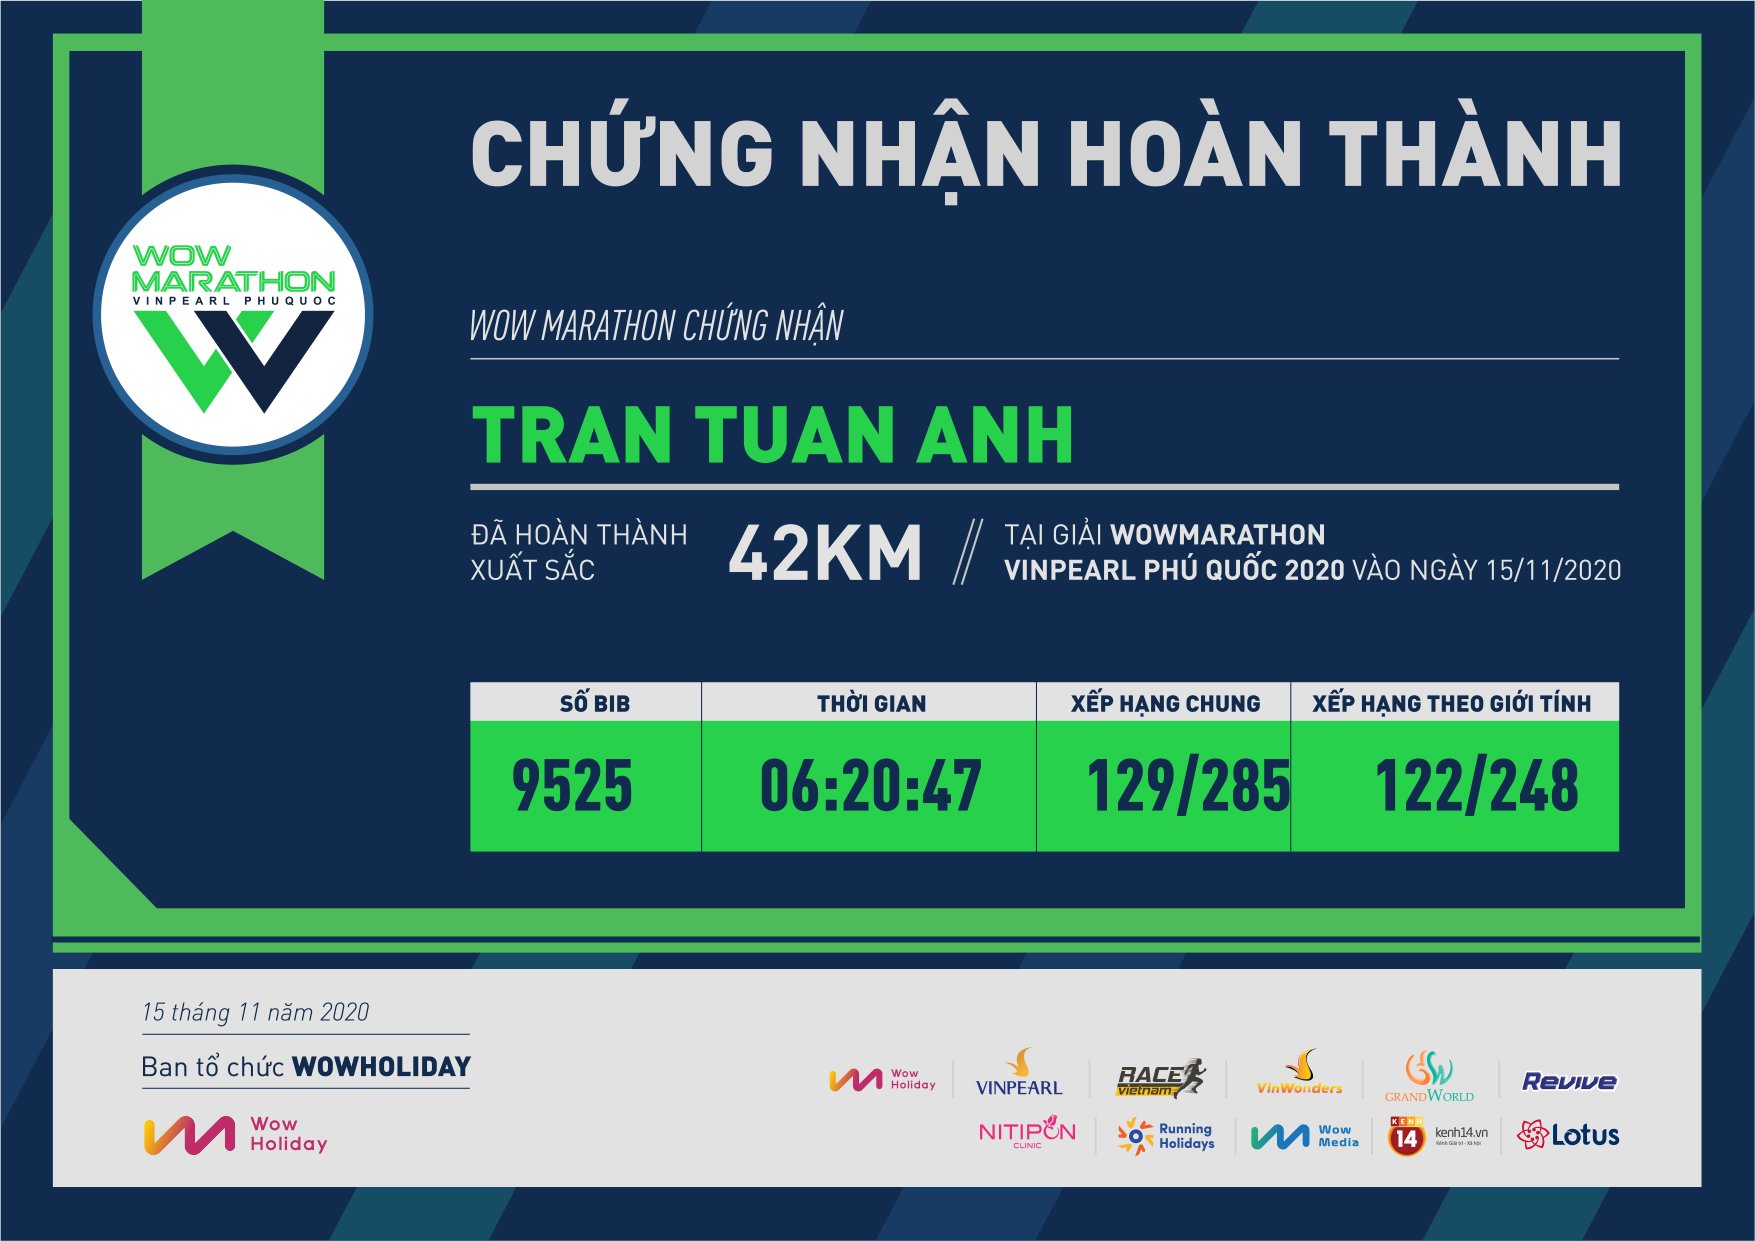 9525 - Tran Tuan Anh